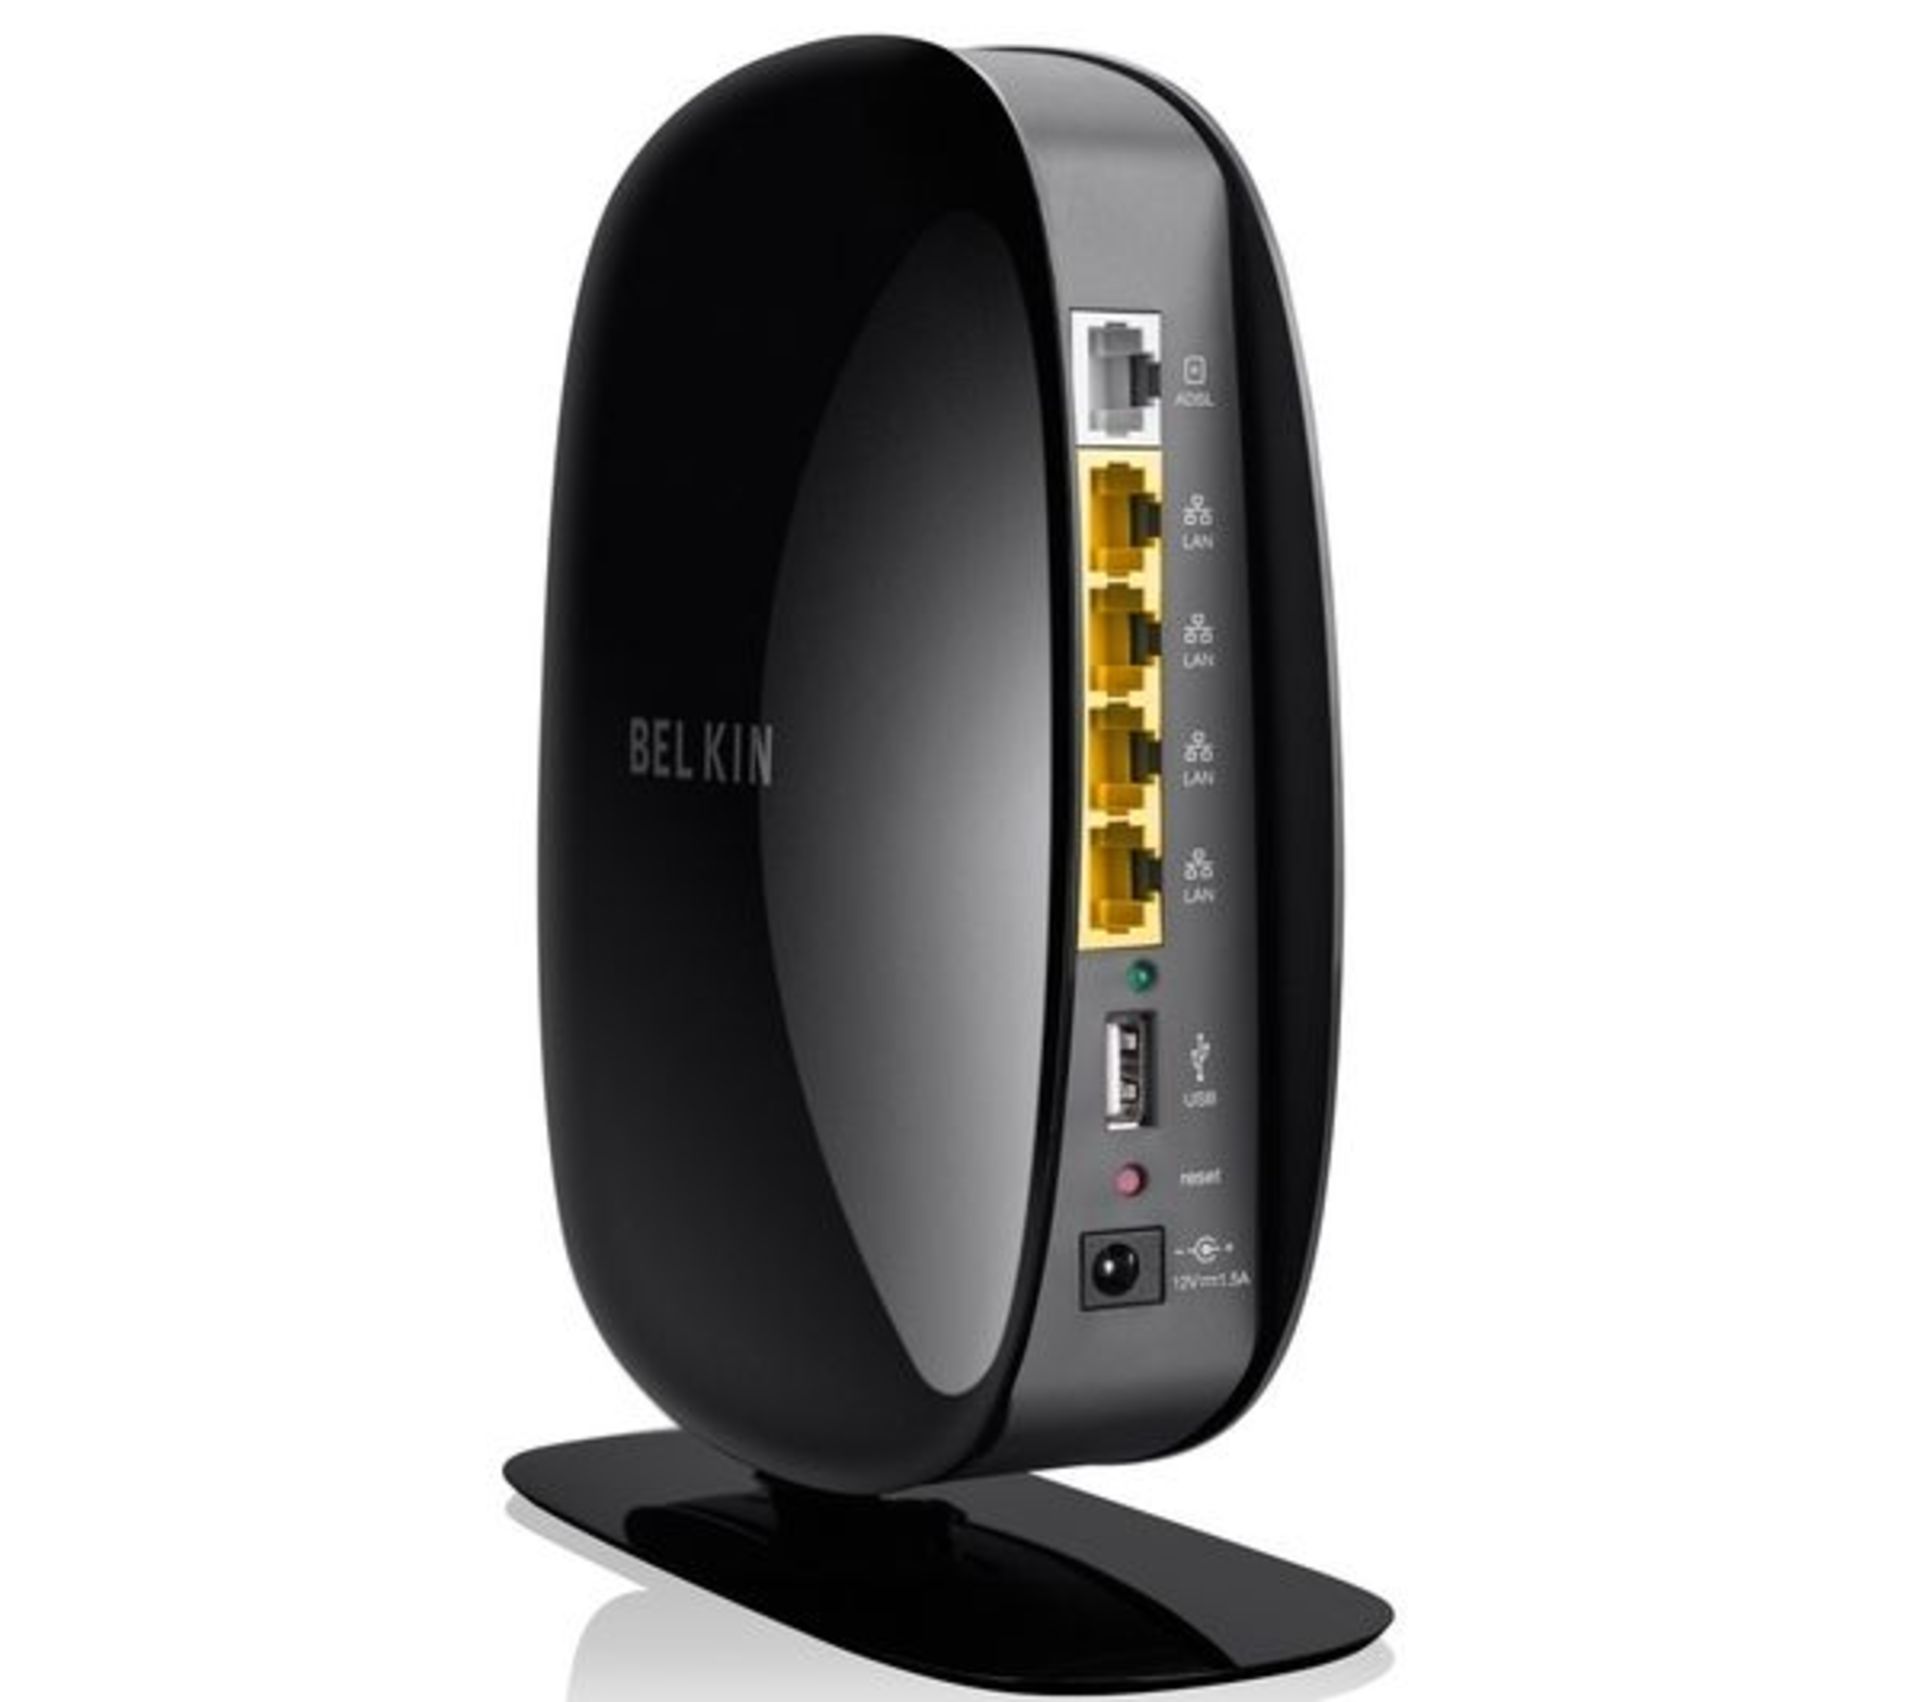 V Brand New Belkin N300 Wireless Modem Router - Easy set Up - WPA/WPA2/WEP Encryption - 4 port